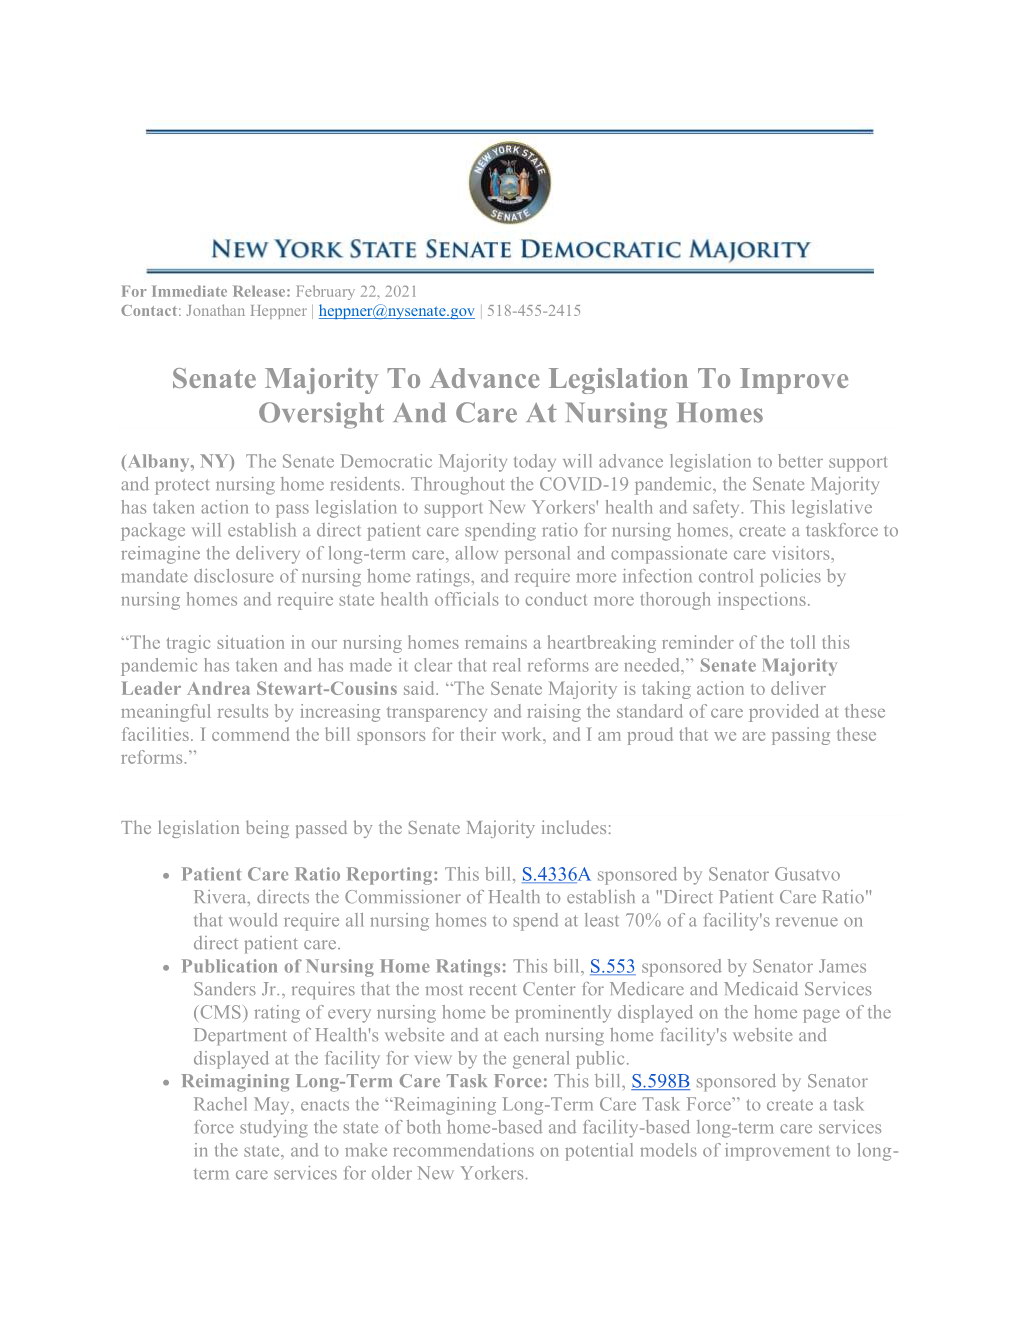 Senate Majority to Advance Legislation to Improve Oversight and Care at Nursing Homes